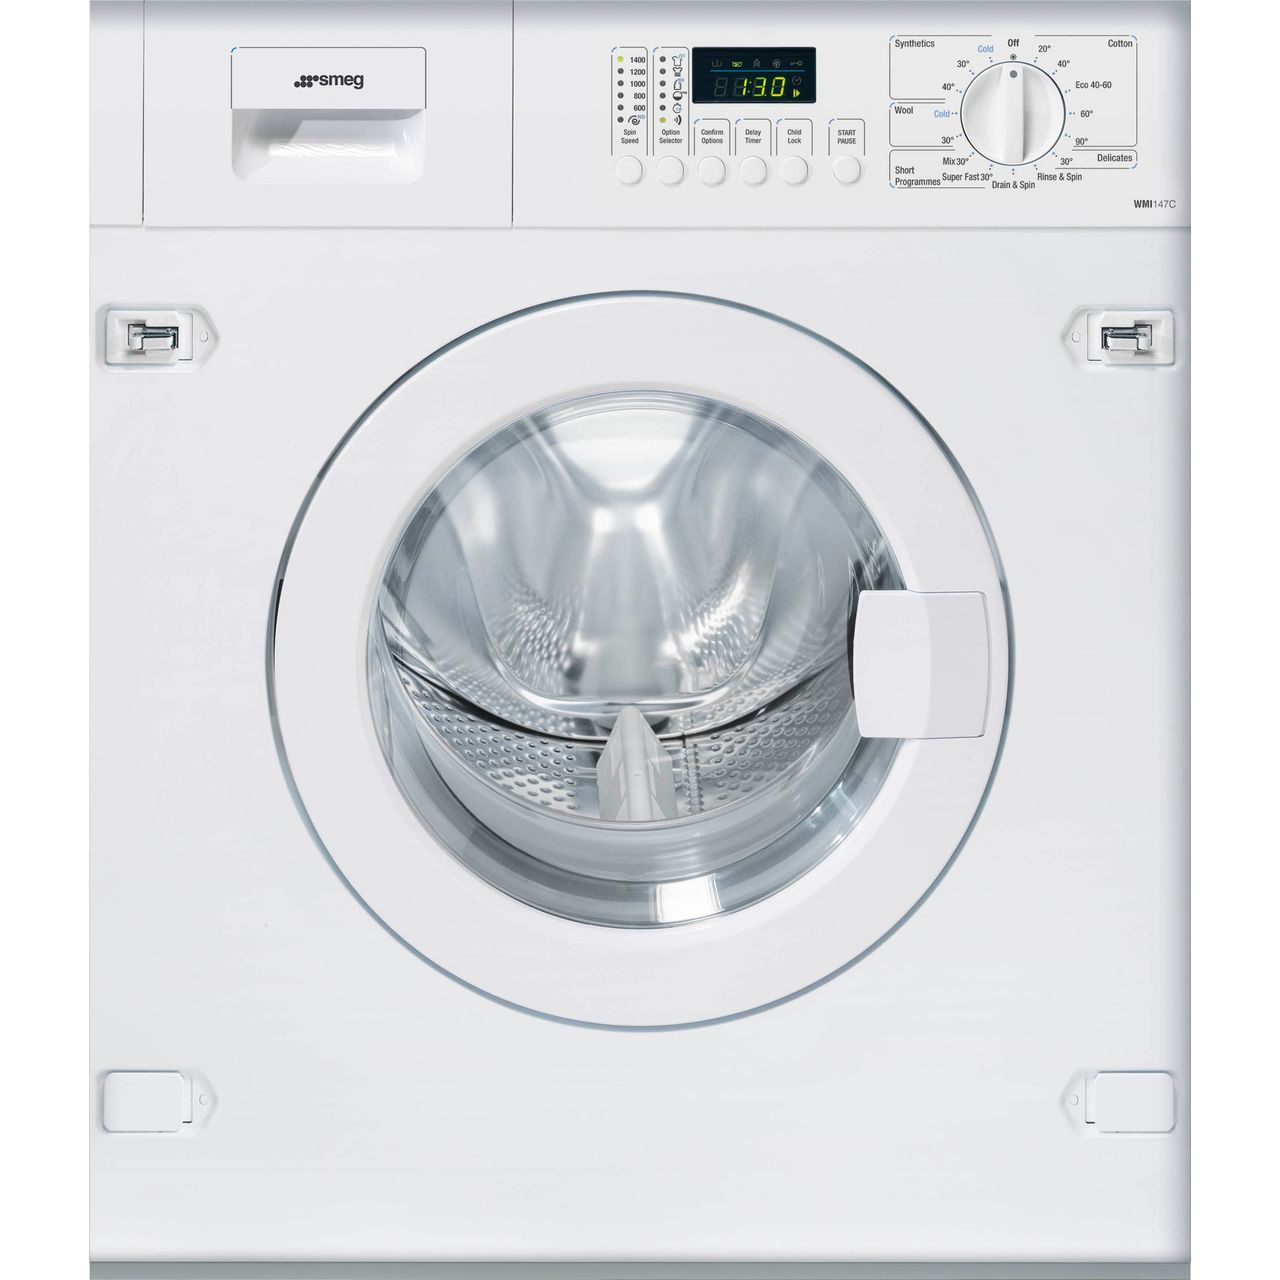 Smeg WMI147C Integrated 7kg Washing Machine with 1400 rpm - White - E Rated, White